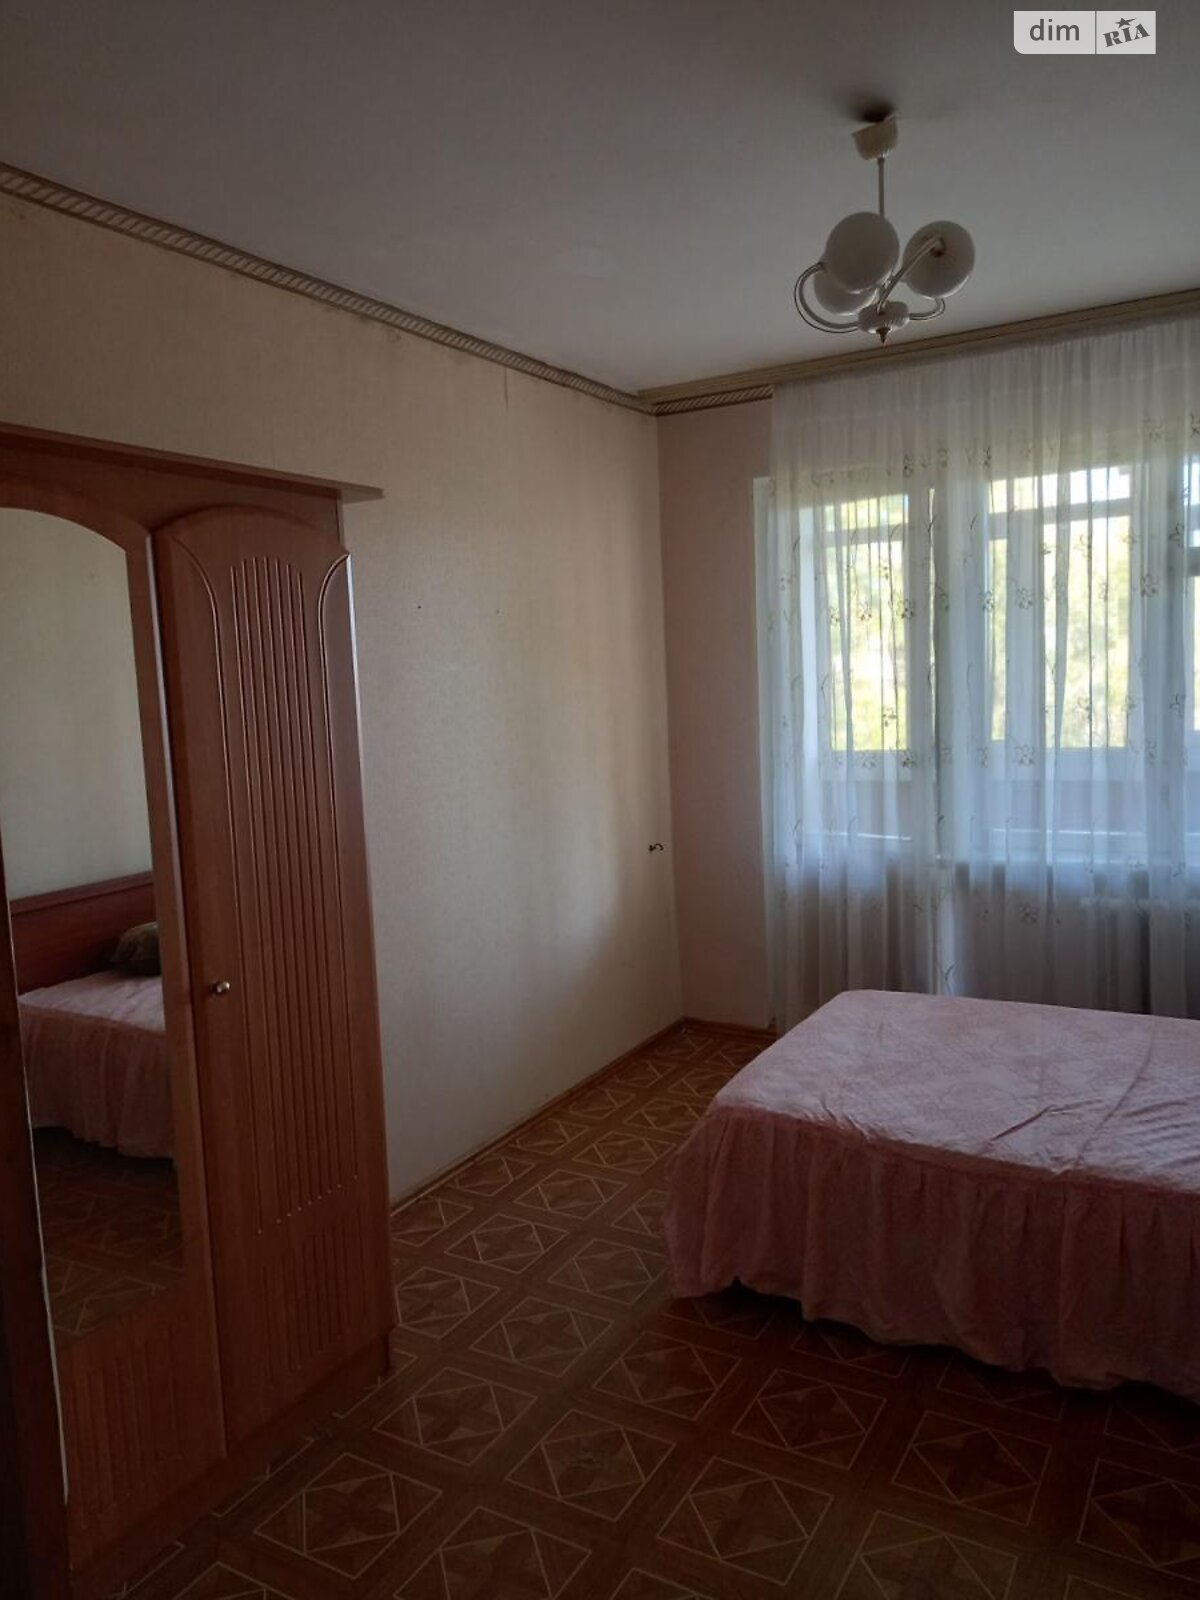 Продажа трехкомнатной квартиры в Одессе, на ул. Академика Королева, район Приморский фото 1